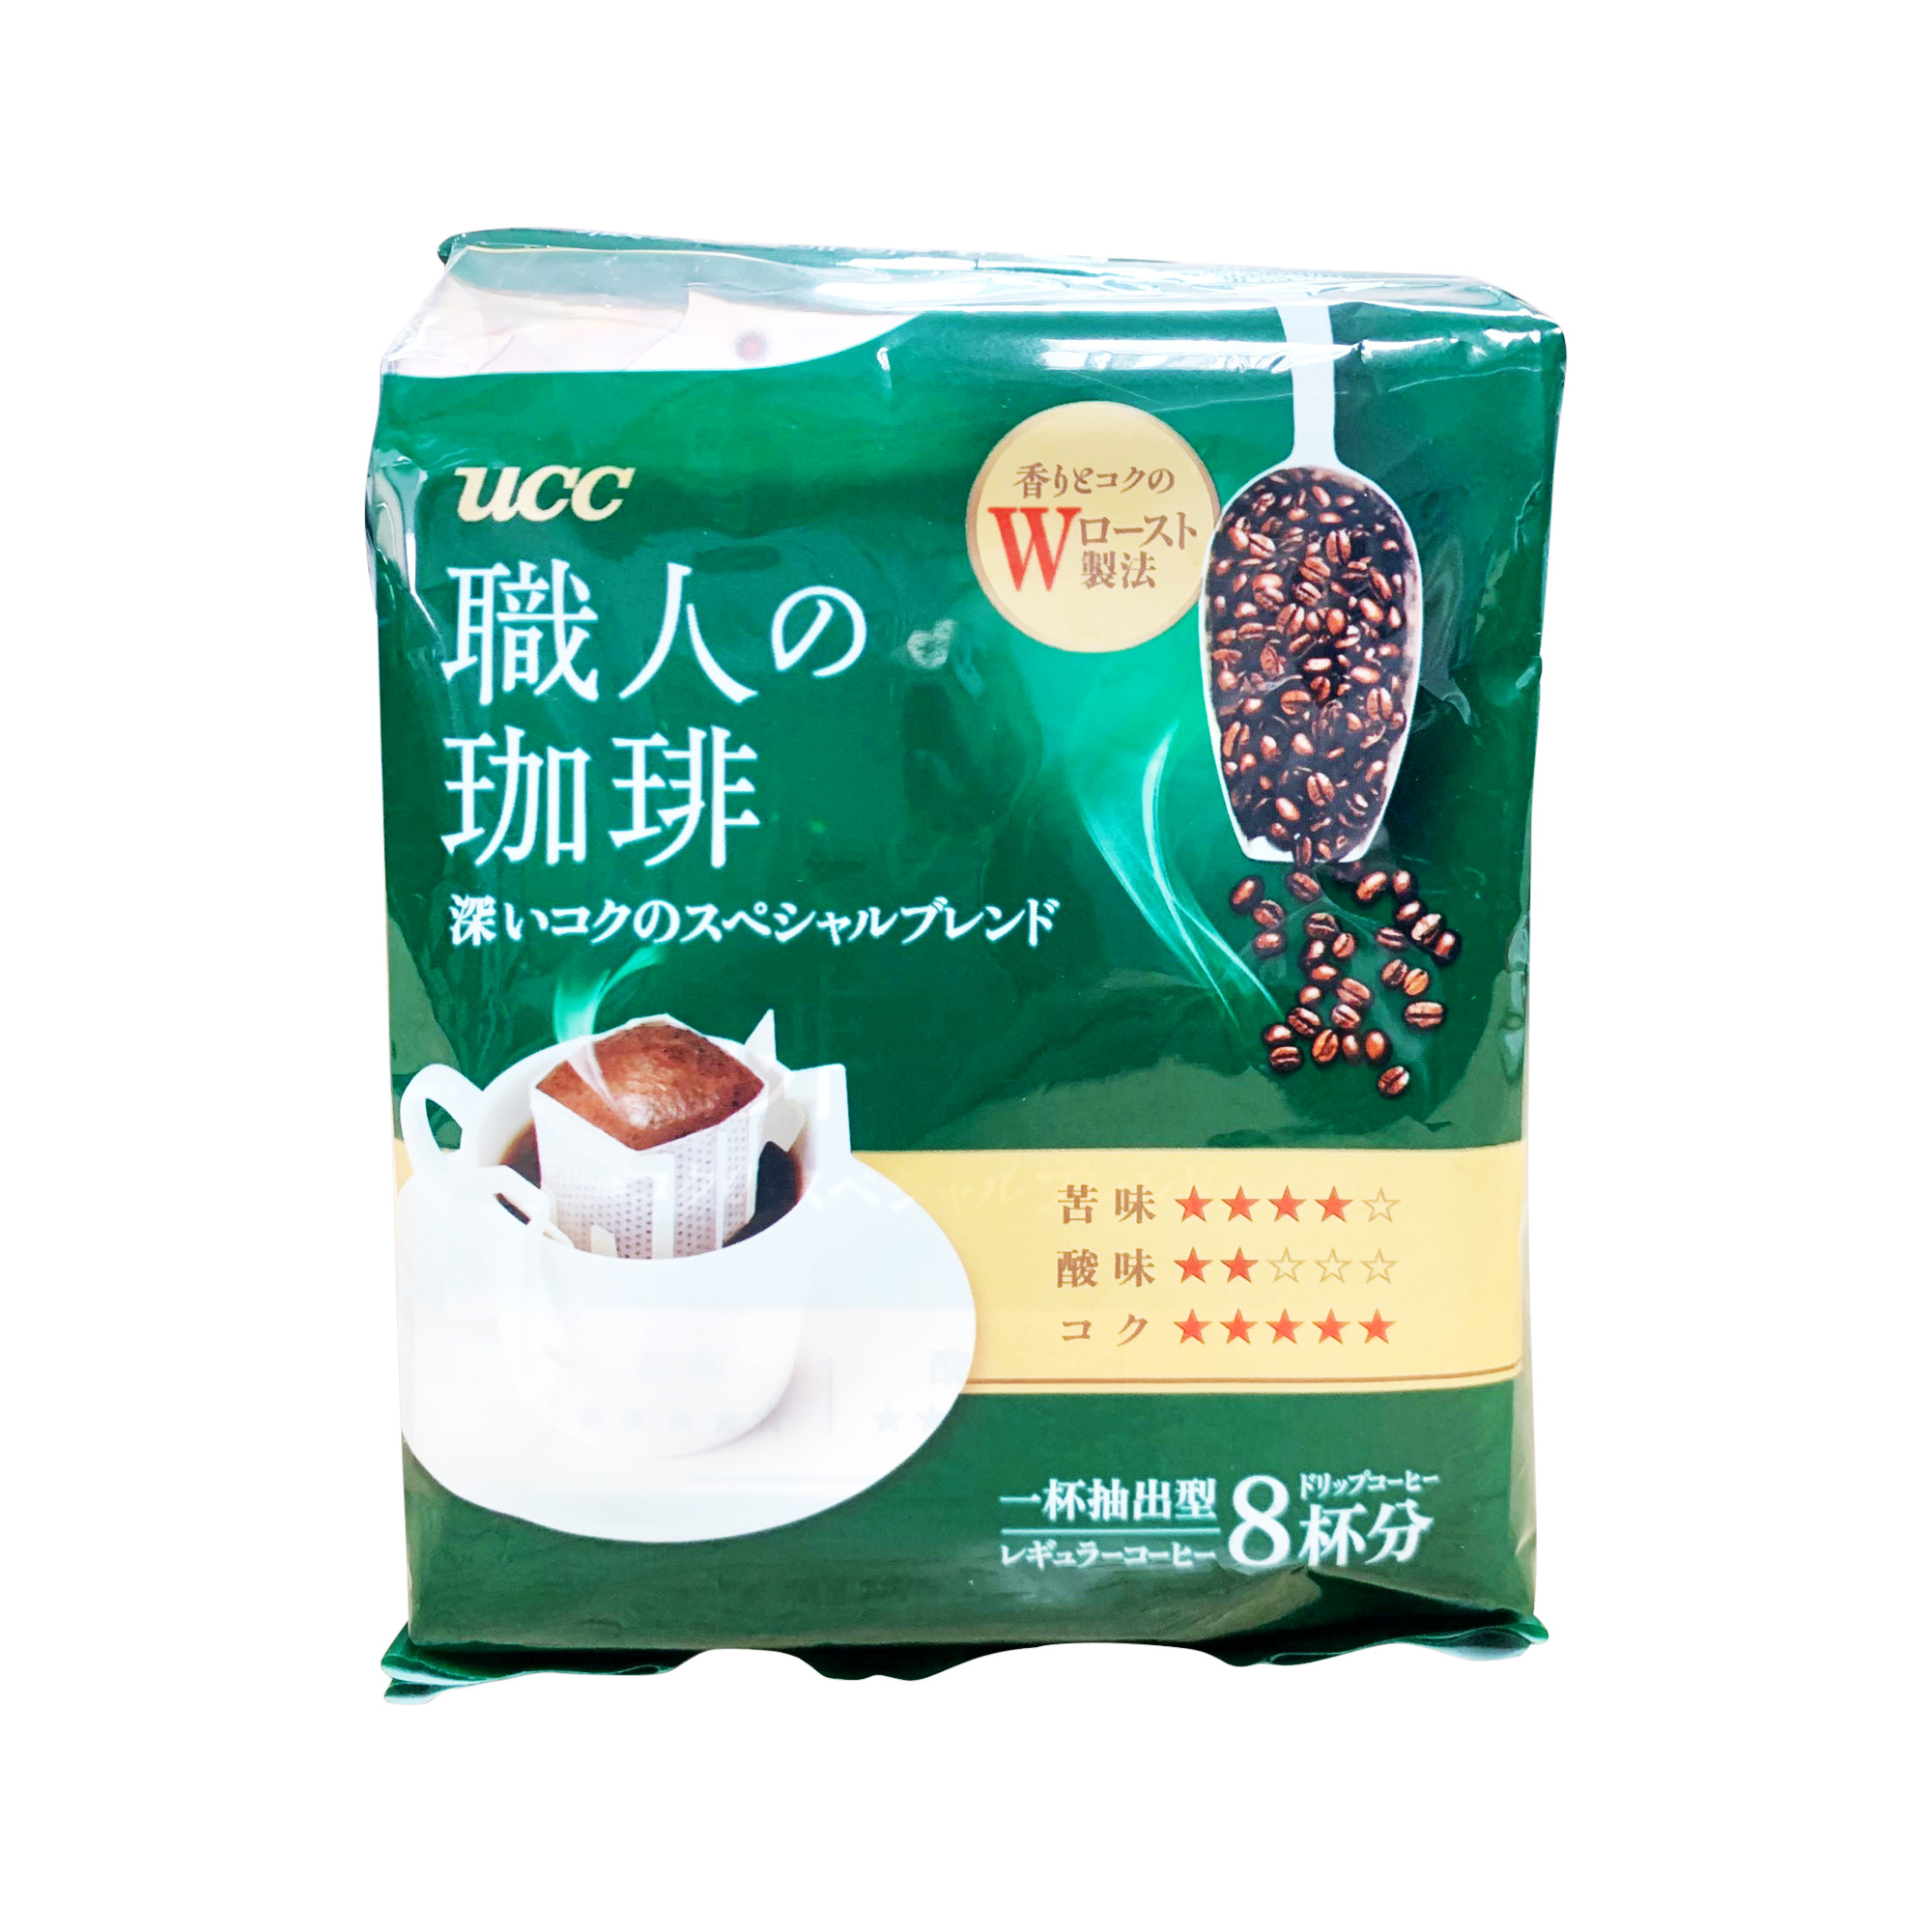 UCC Powder Special Coffee Blend Drip 56g